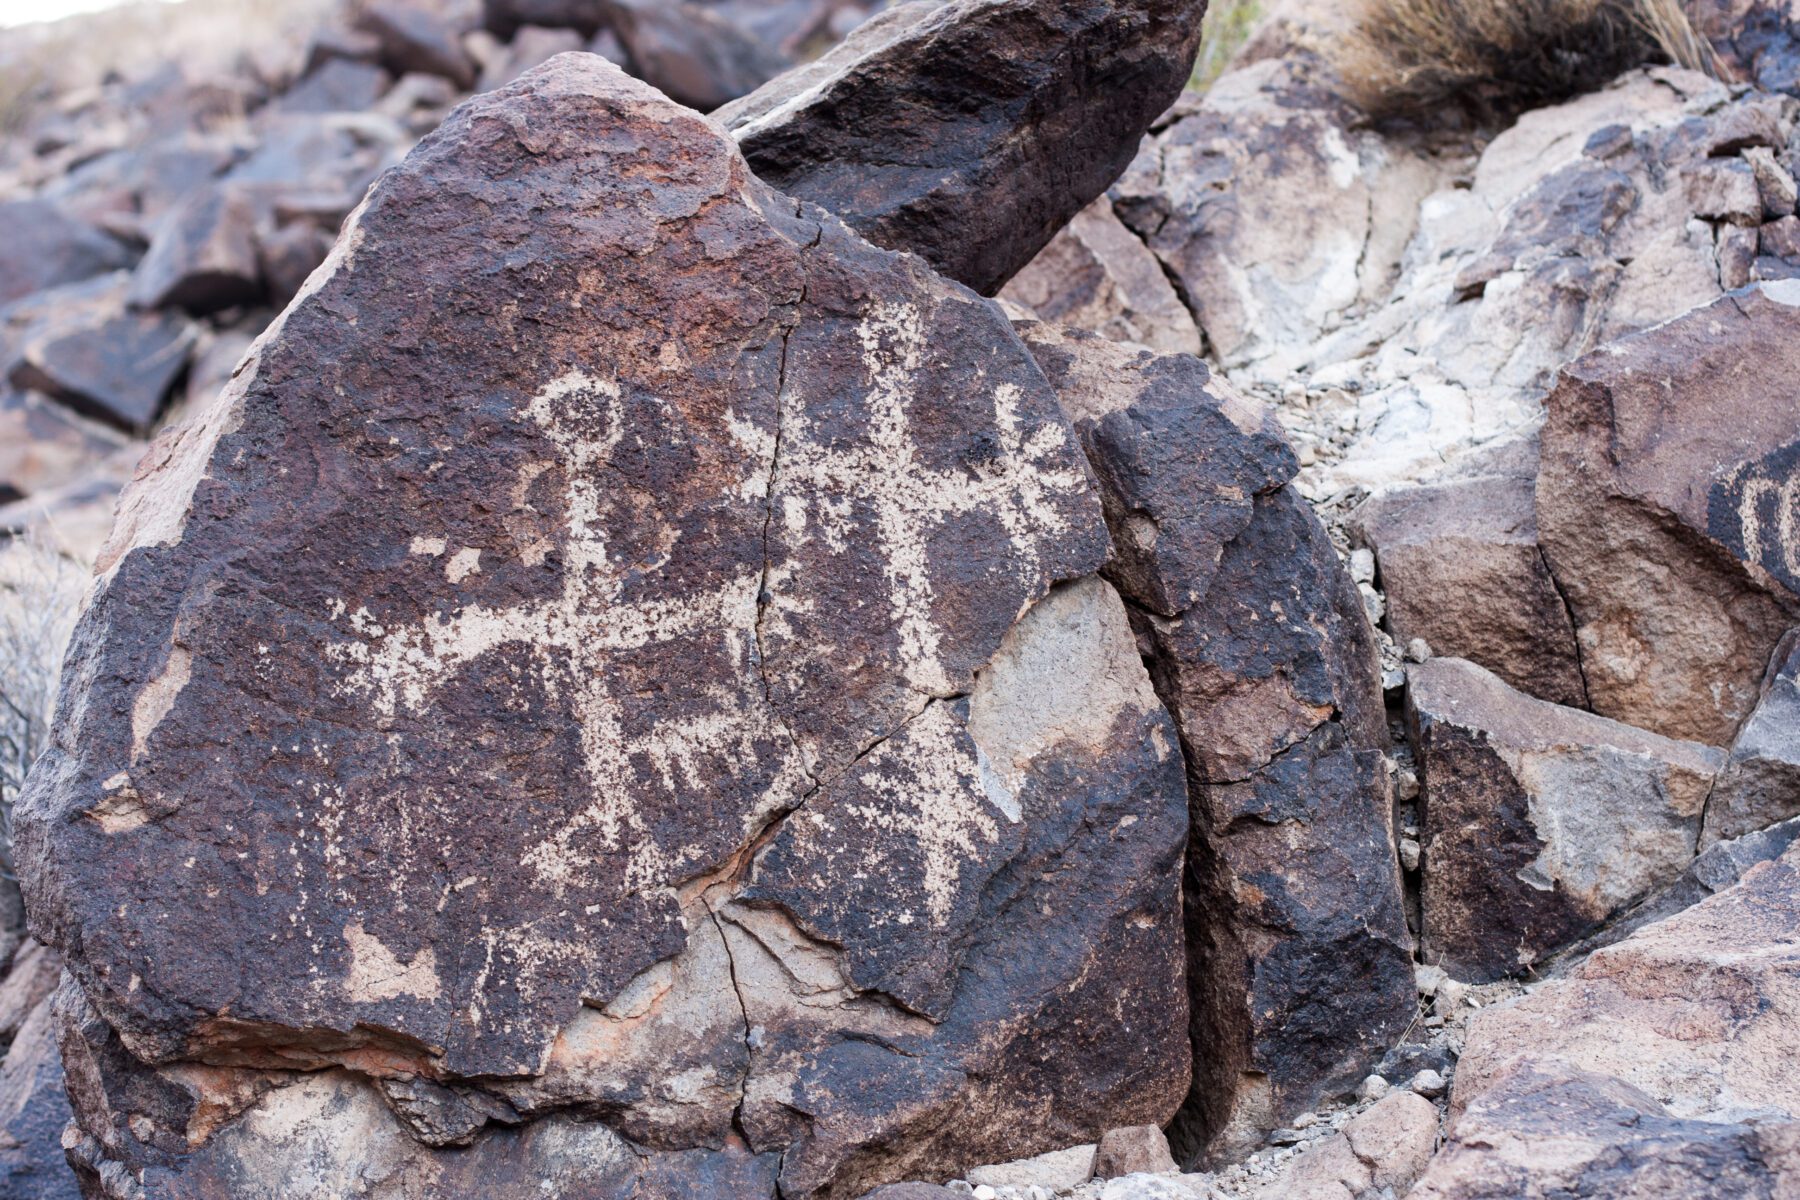 Hikes Las Vegas petroglyph trail